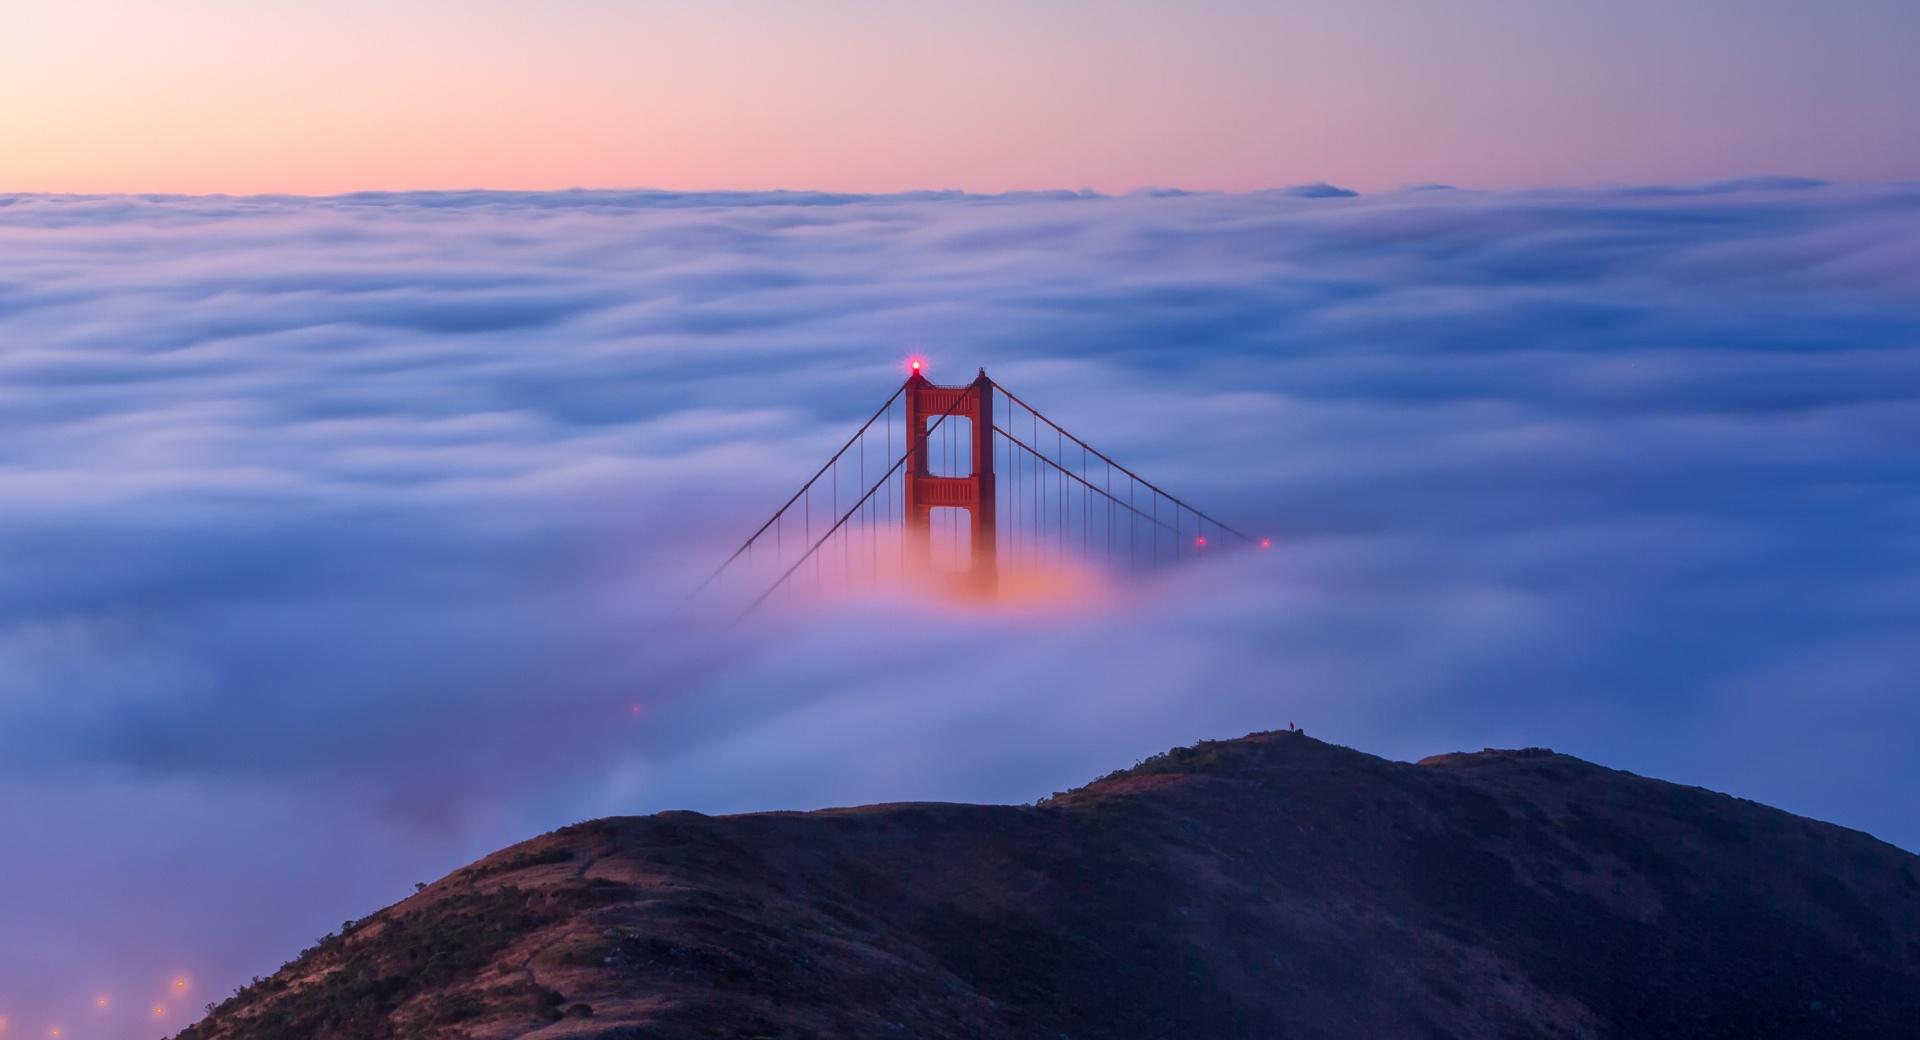 Golden Gate Bridge Fog Sunrise at 1280 x 960 size wallpapers HD quality